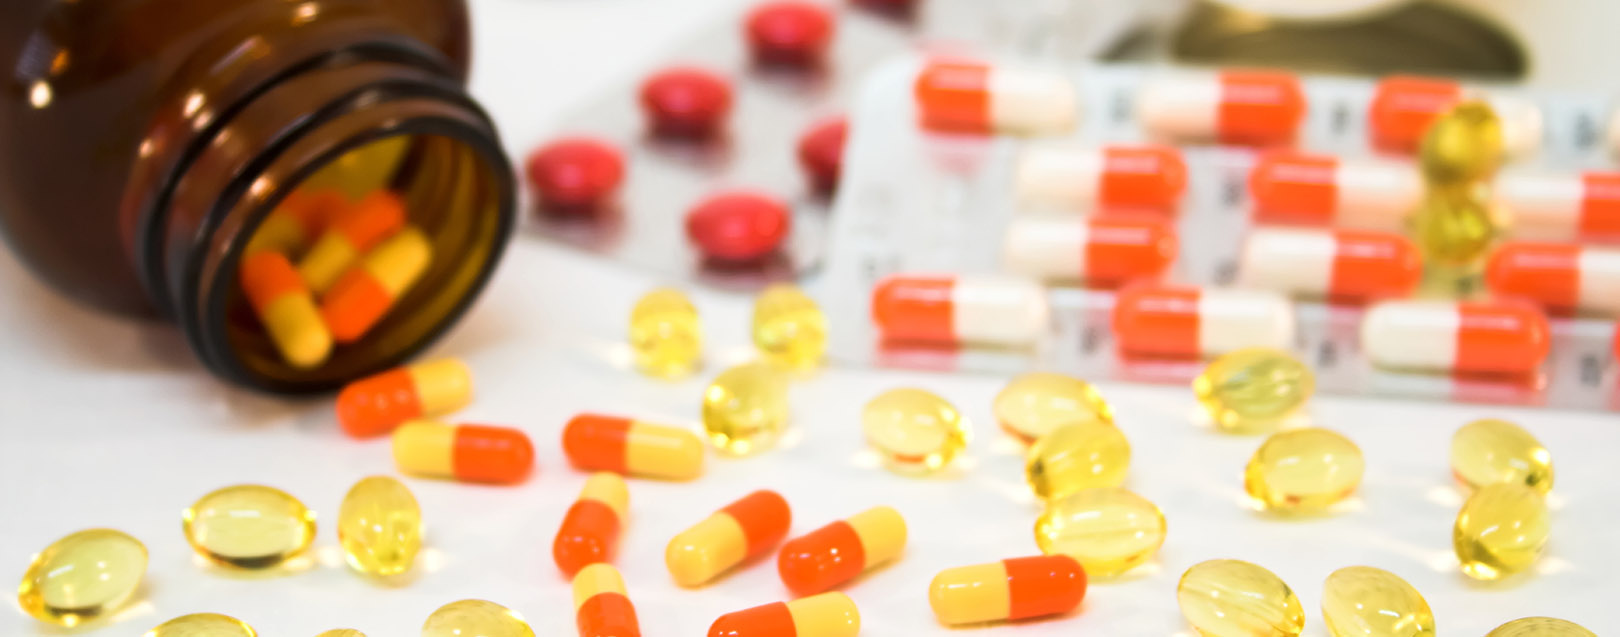 Natco Pharma gets ANDA nod for Tamiflu drugs